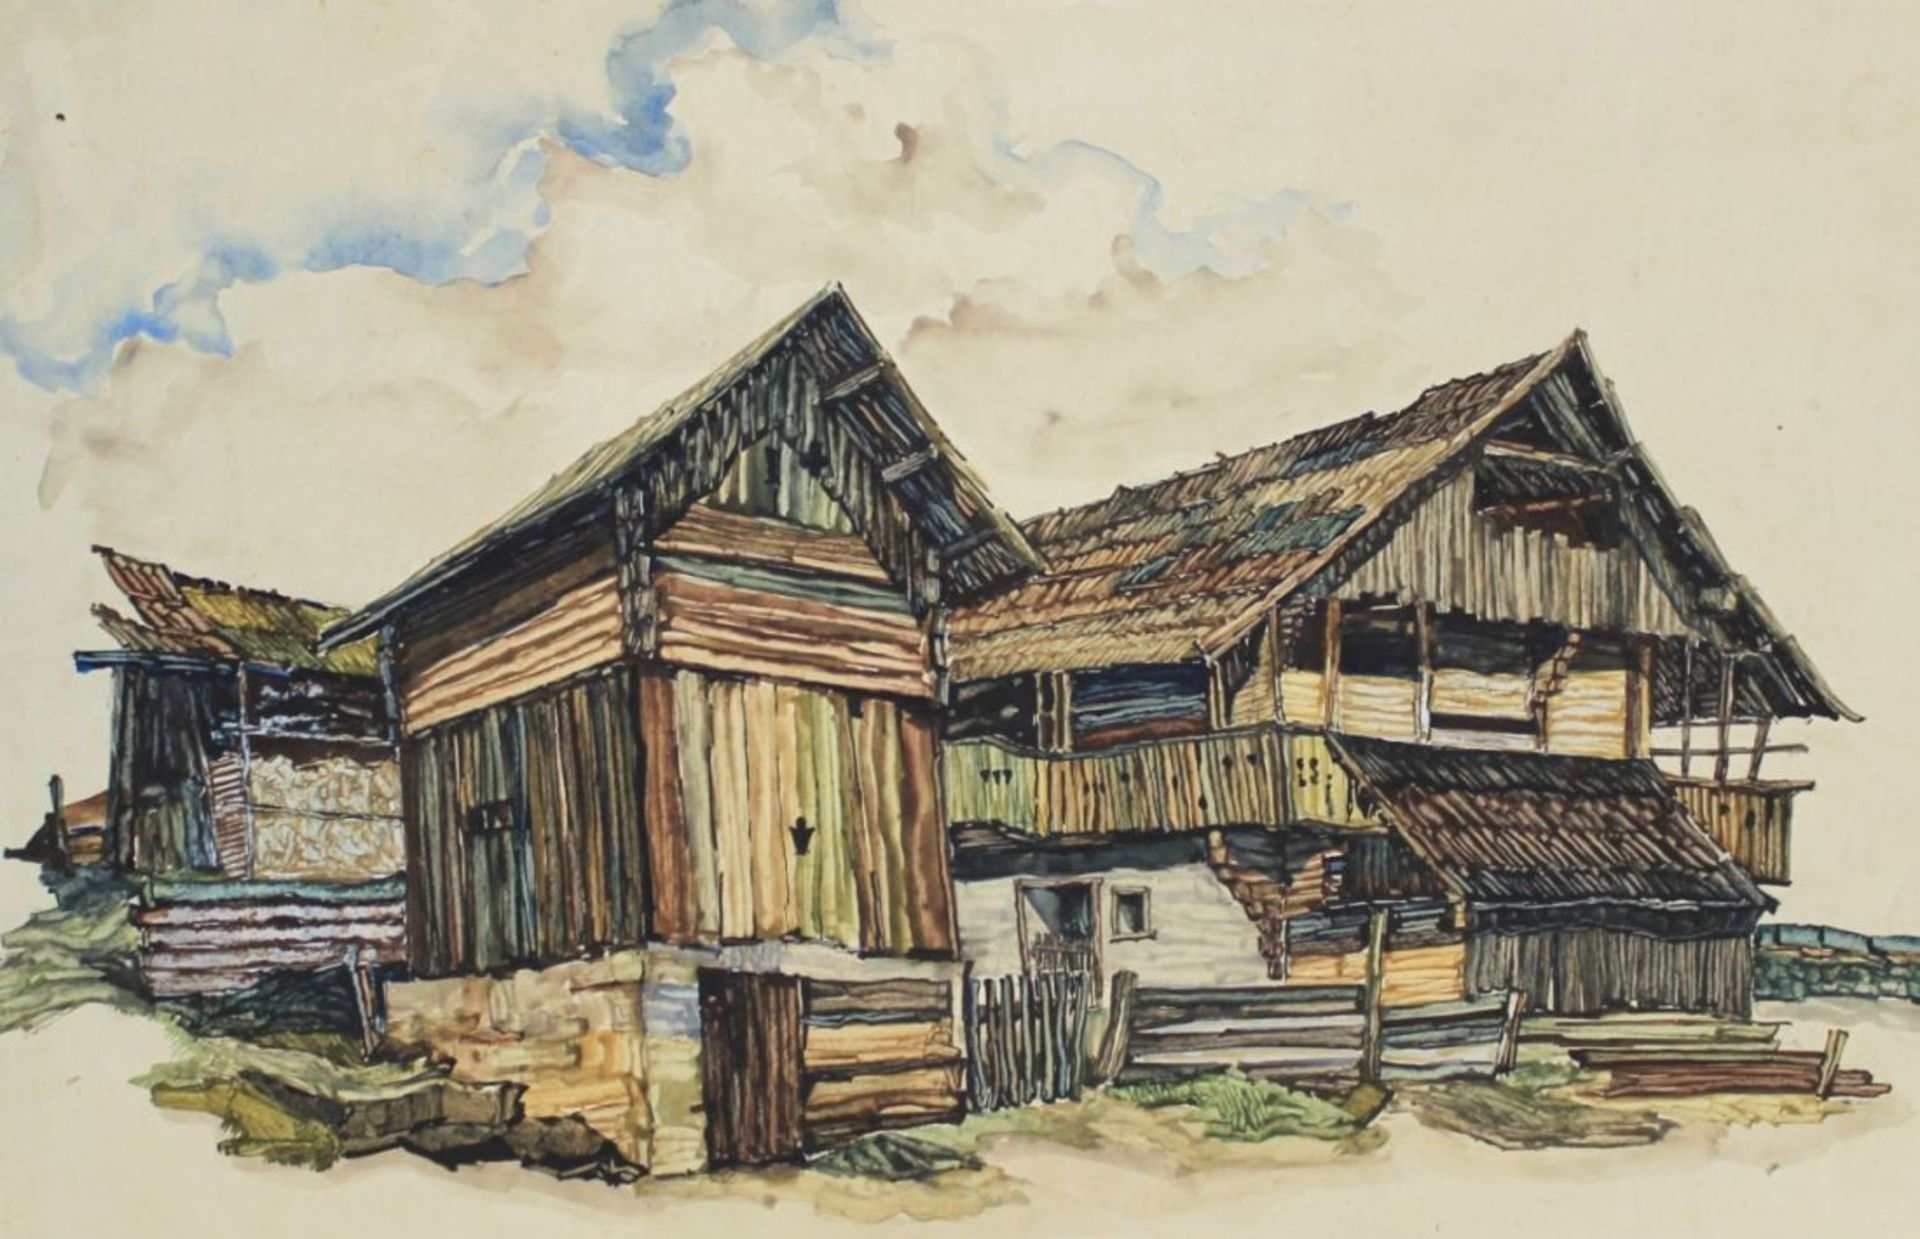 Aquarell - Oskar Matulla (1900 - 1982 Wien) "Bauernhof", lasierende Farben auf Papier, Maße